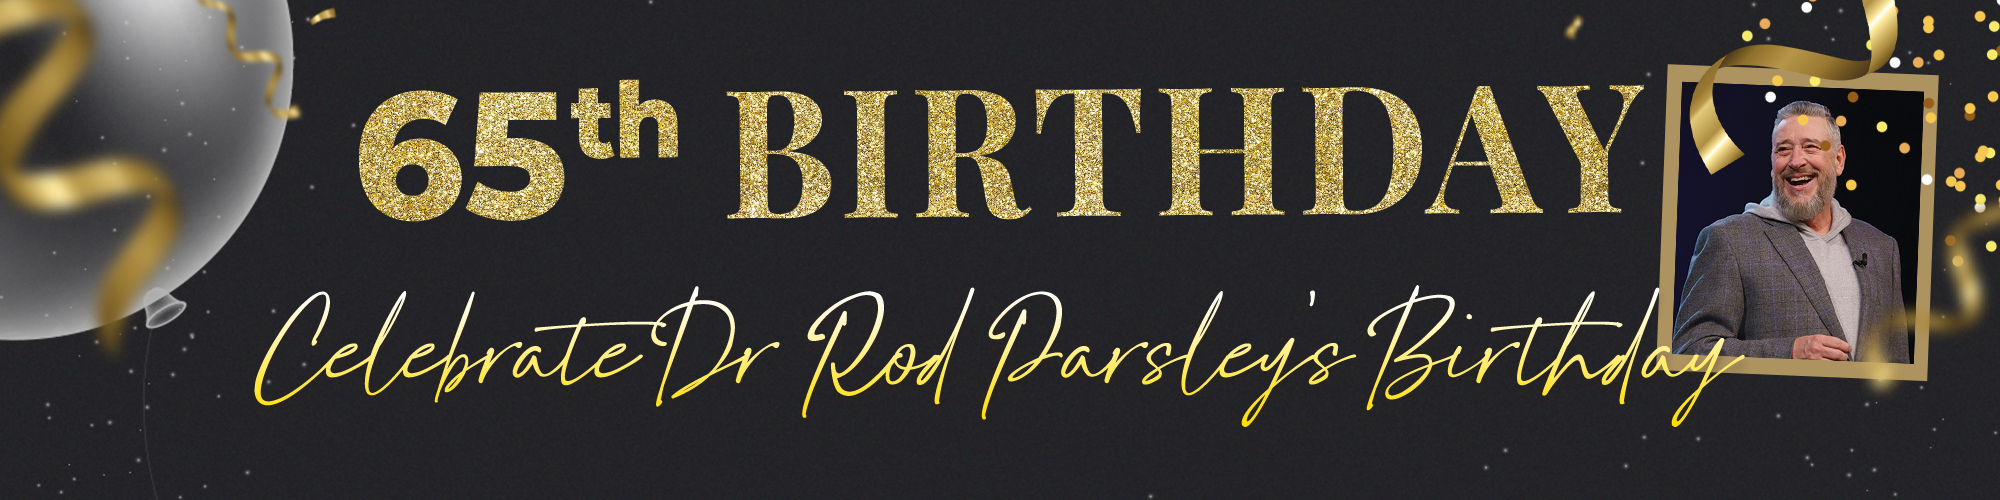 65th Birthday Celebrate Dr. Rod Parsley's Birthday